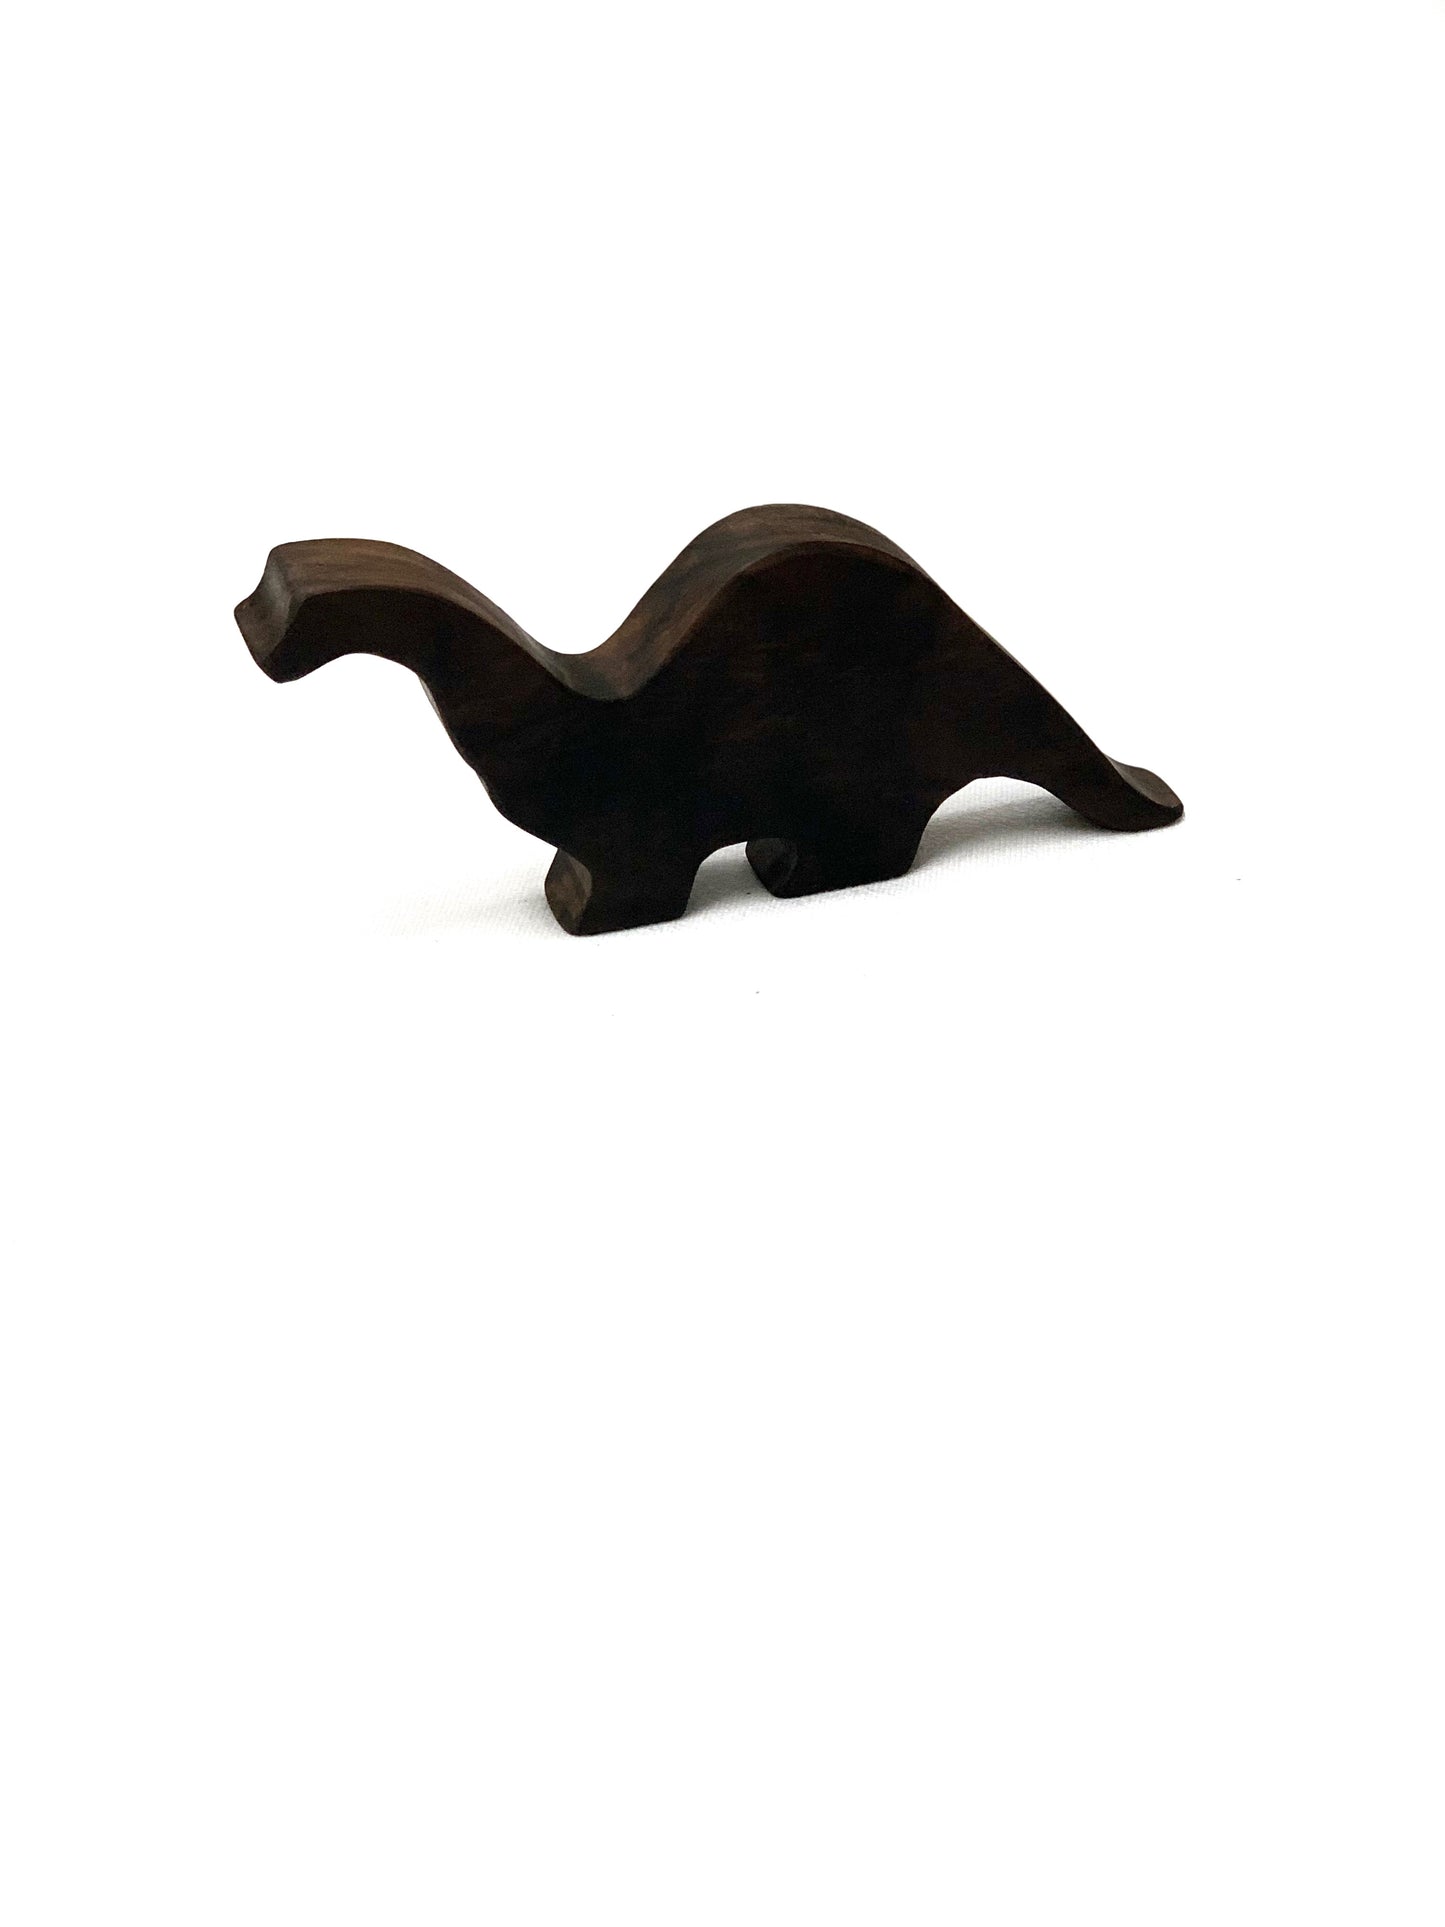 Long Neck Brachiosaurus Wood Toy Figurine